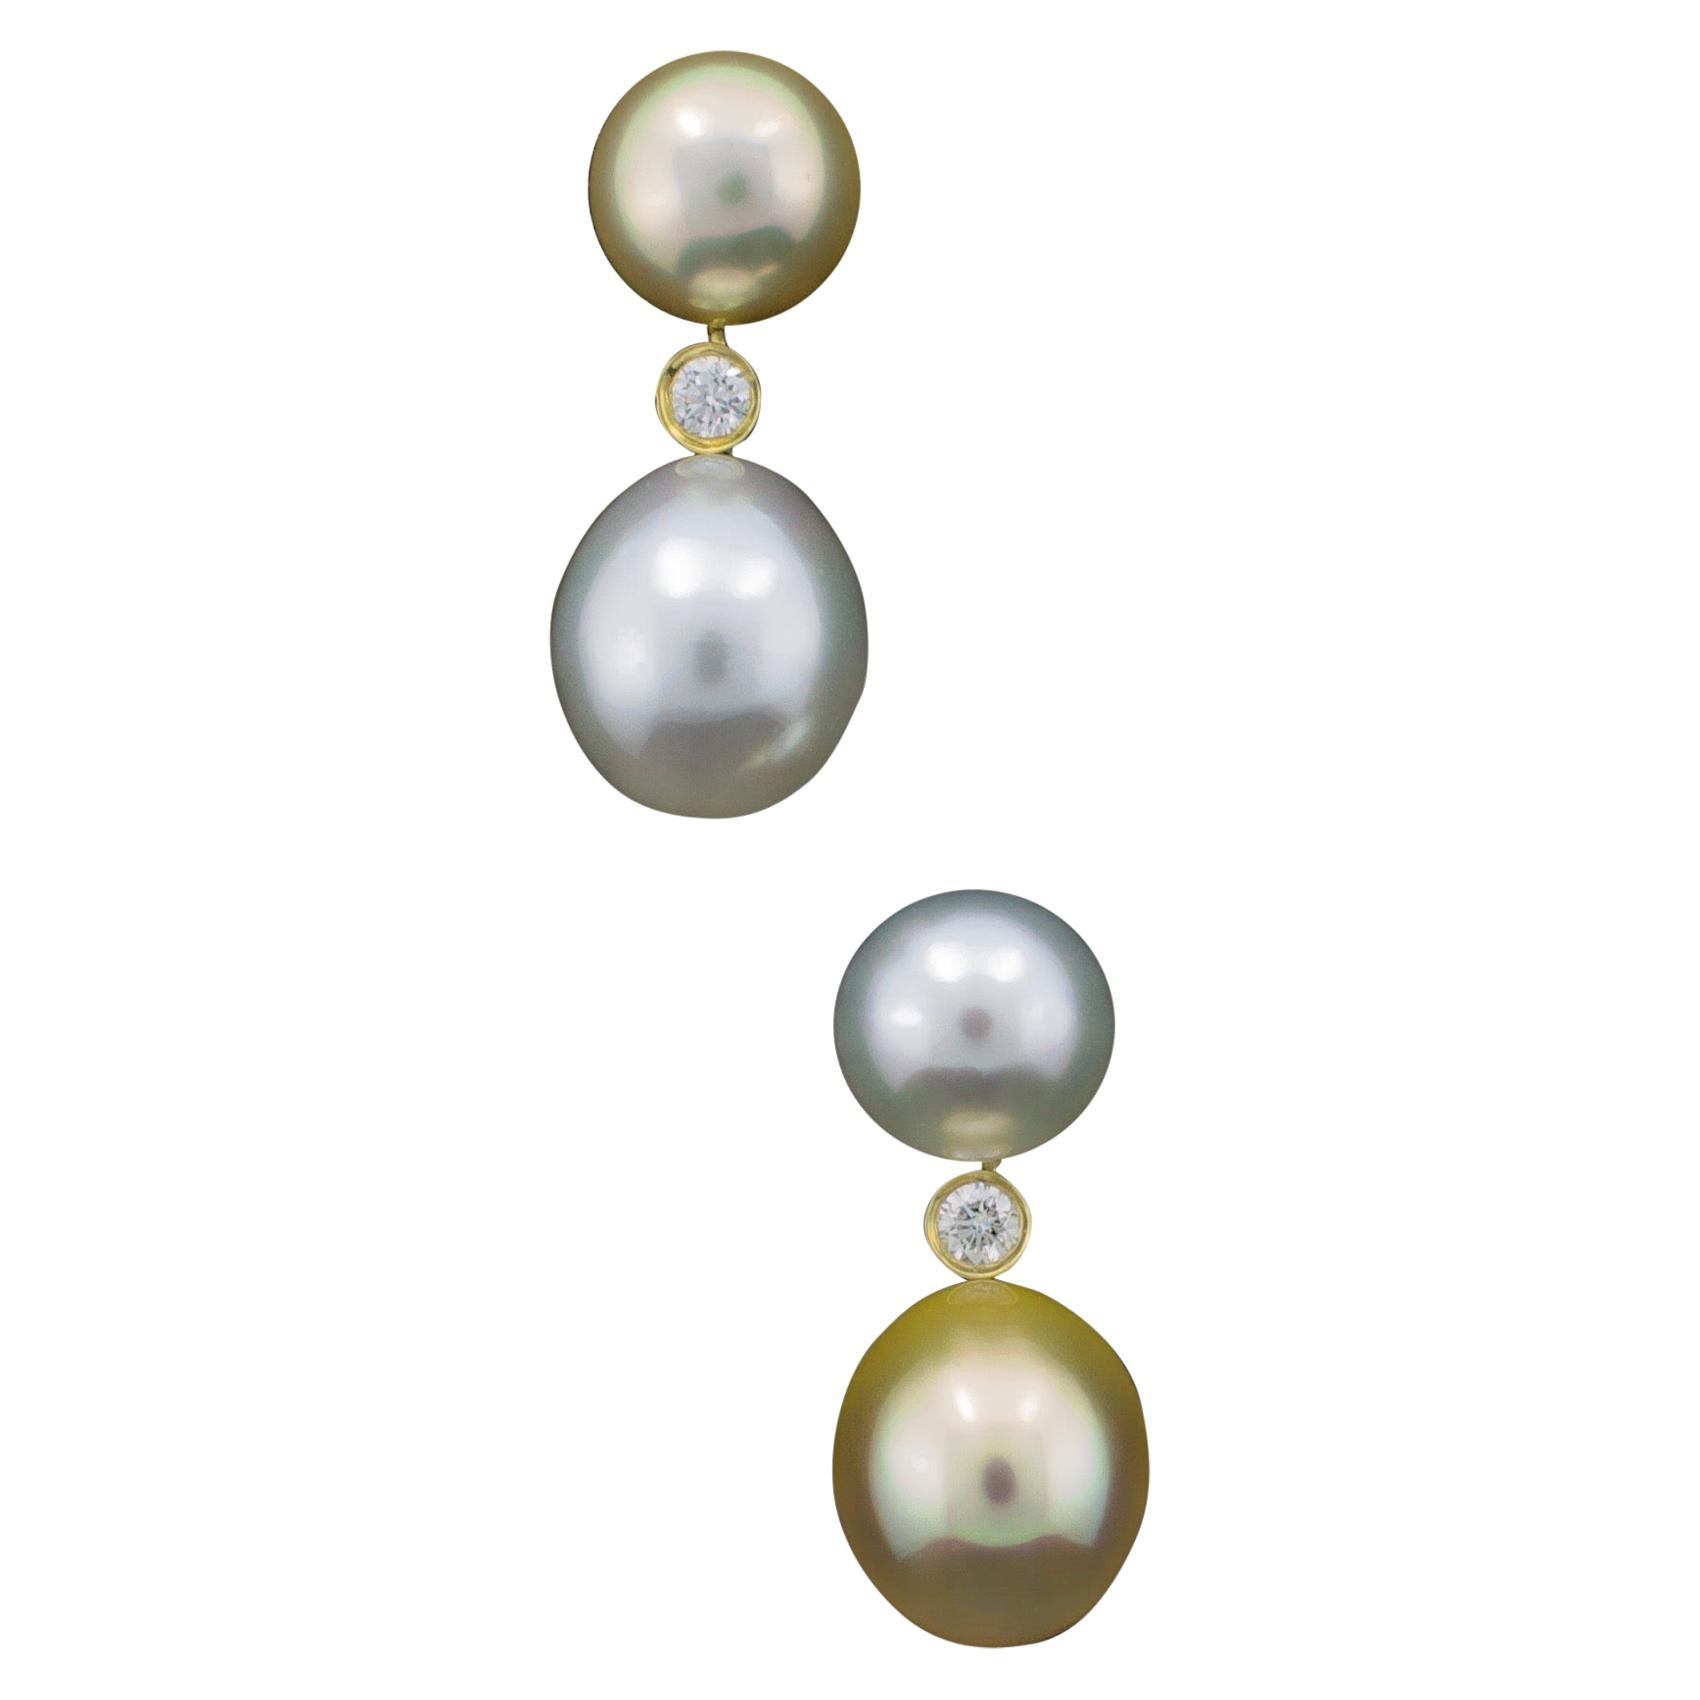 South Sea Pearl and Diamond "Crisscross" Earrings in 18 Karat Yellow Gold